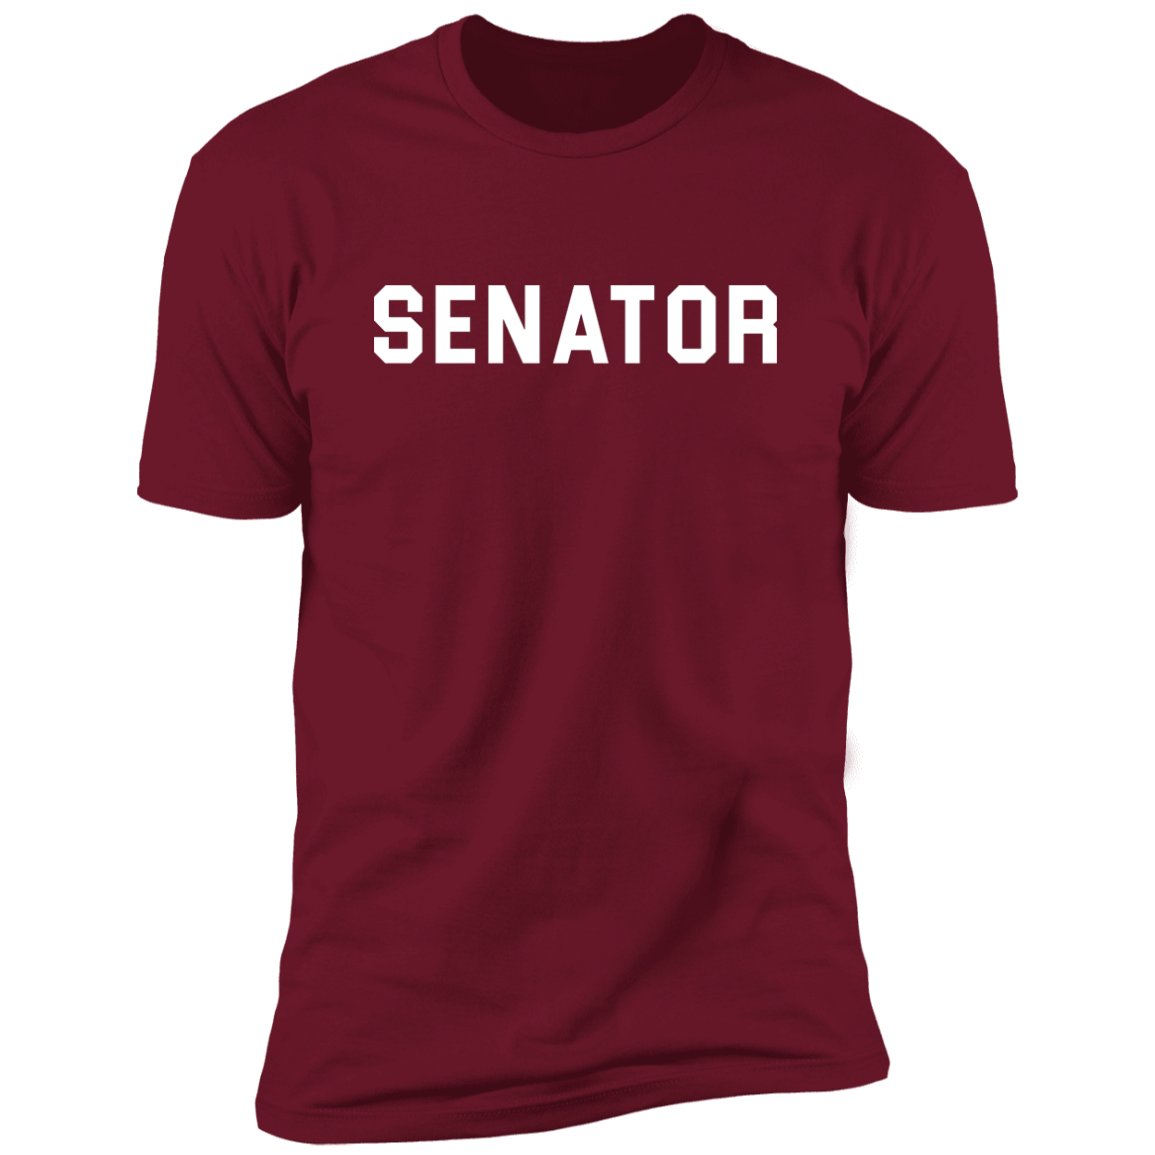 "Senator" U.S. Senate Uniform T-Shirt